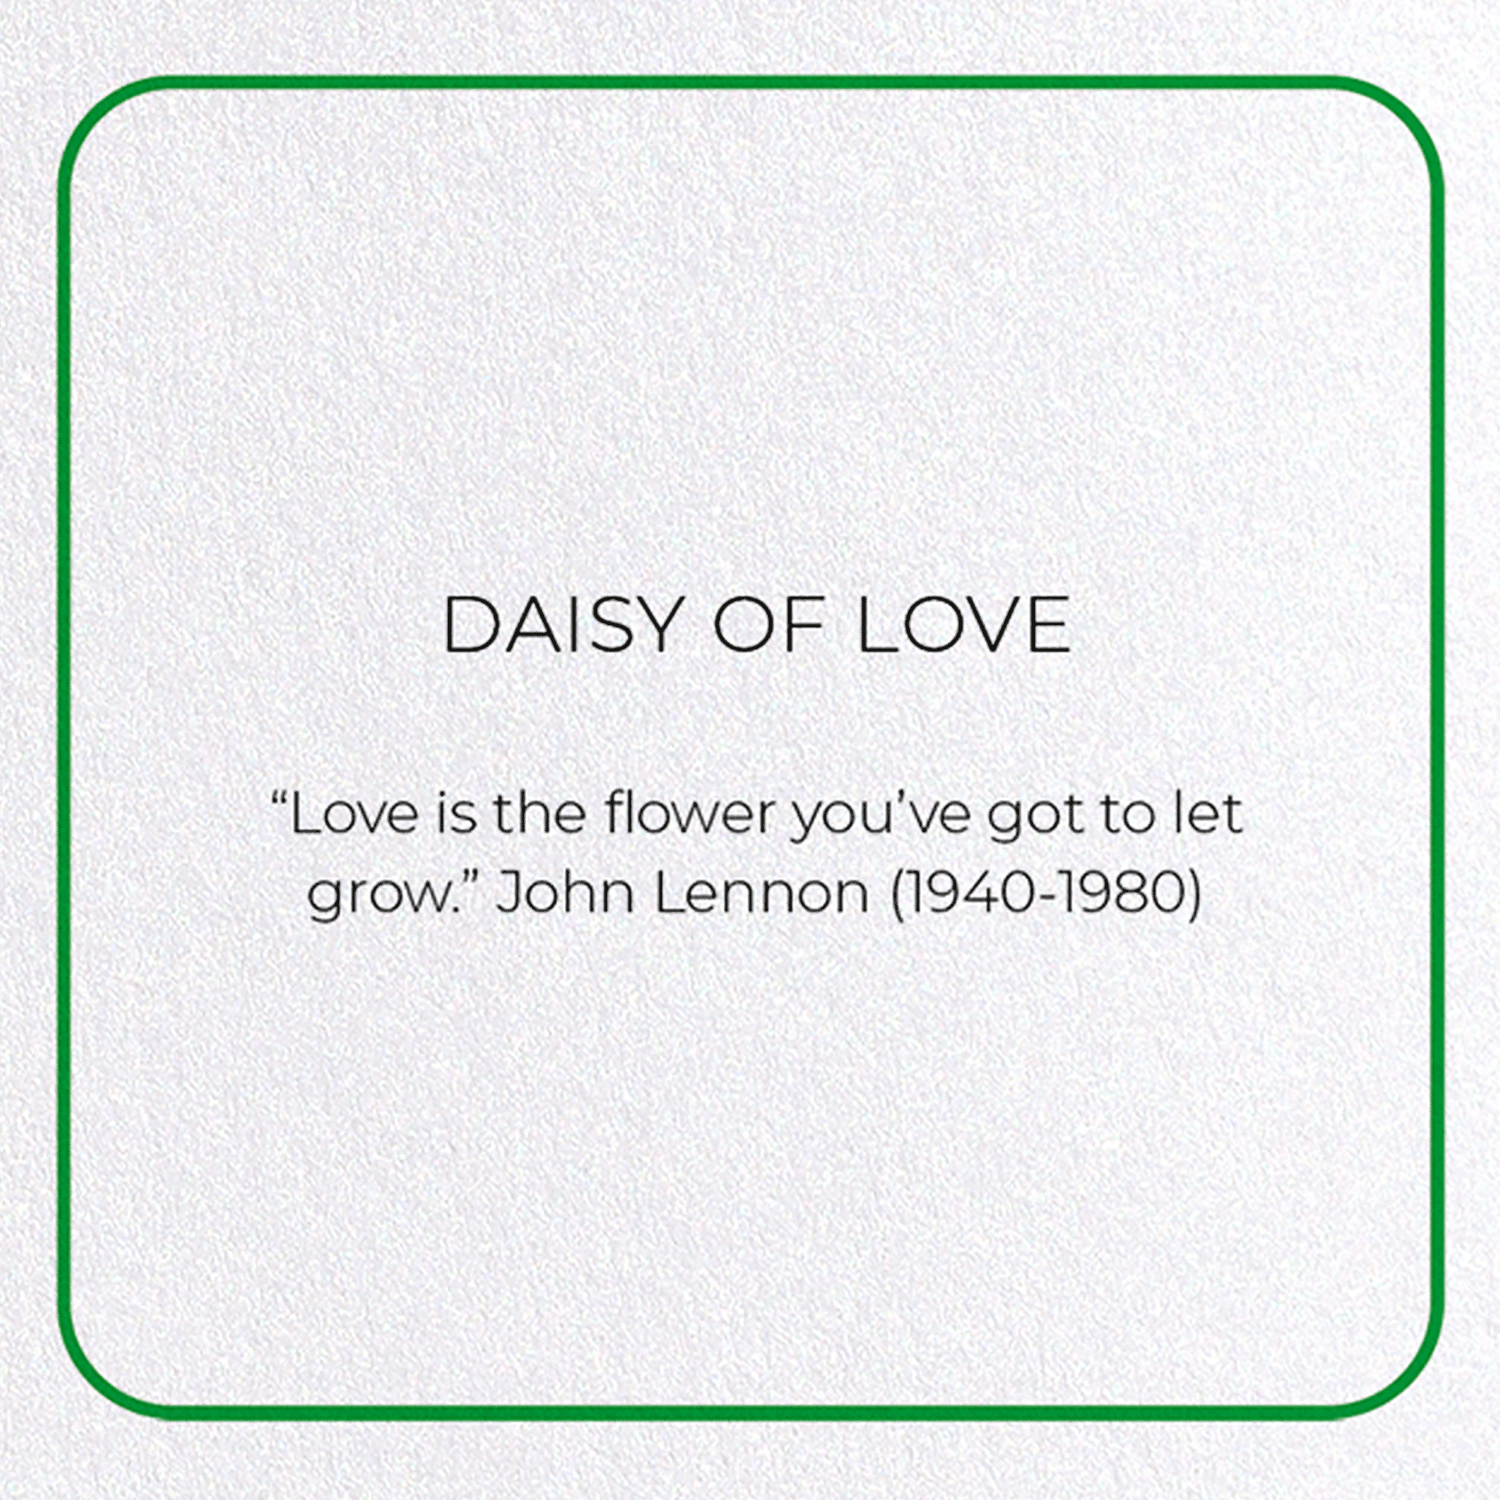 DAISY OF LOVE: Photo Greeting Card